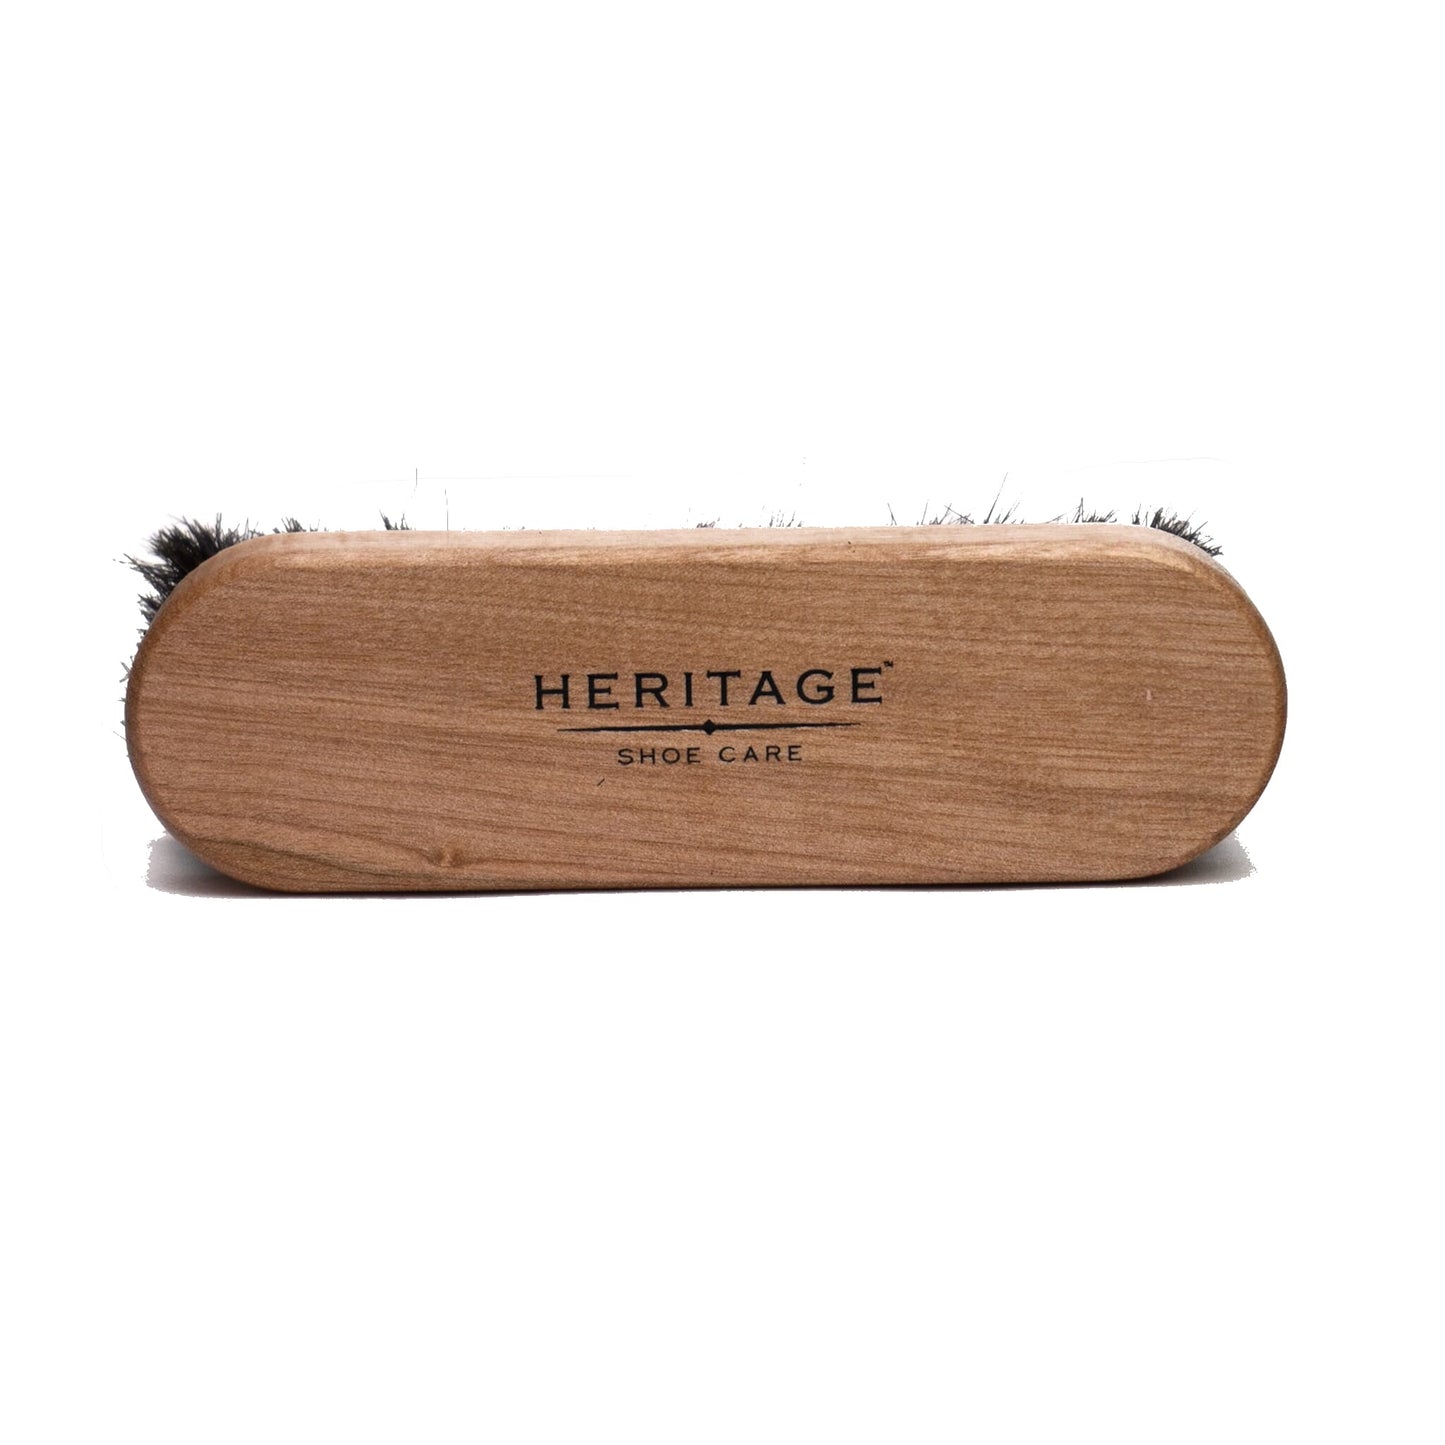 Heritage Mini Brushes